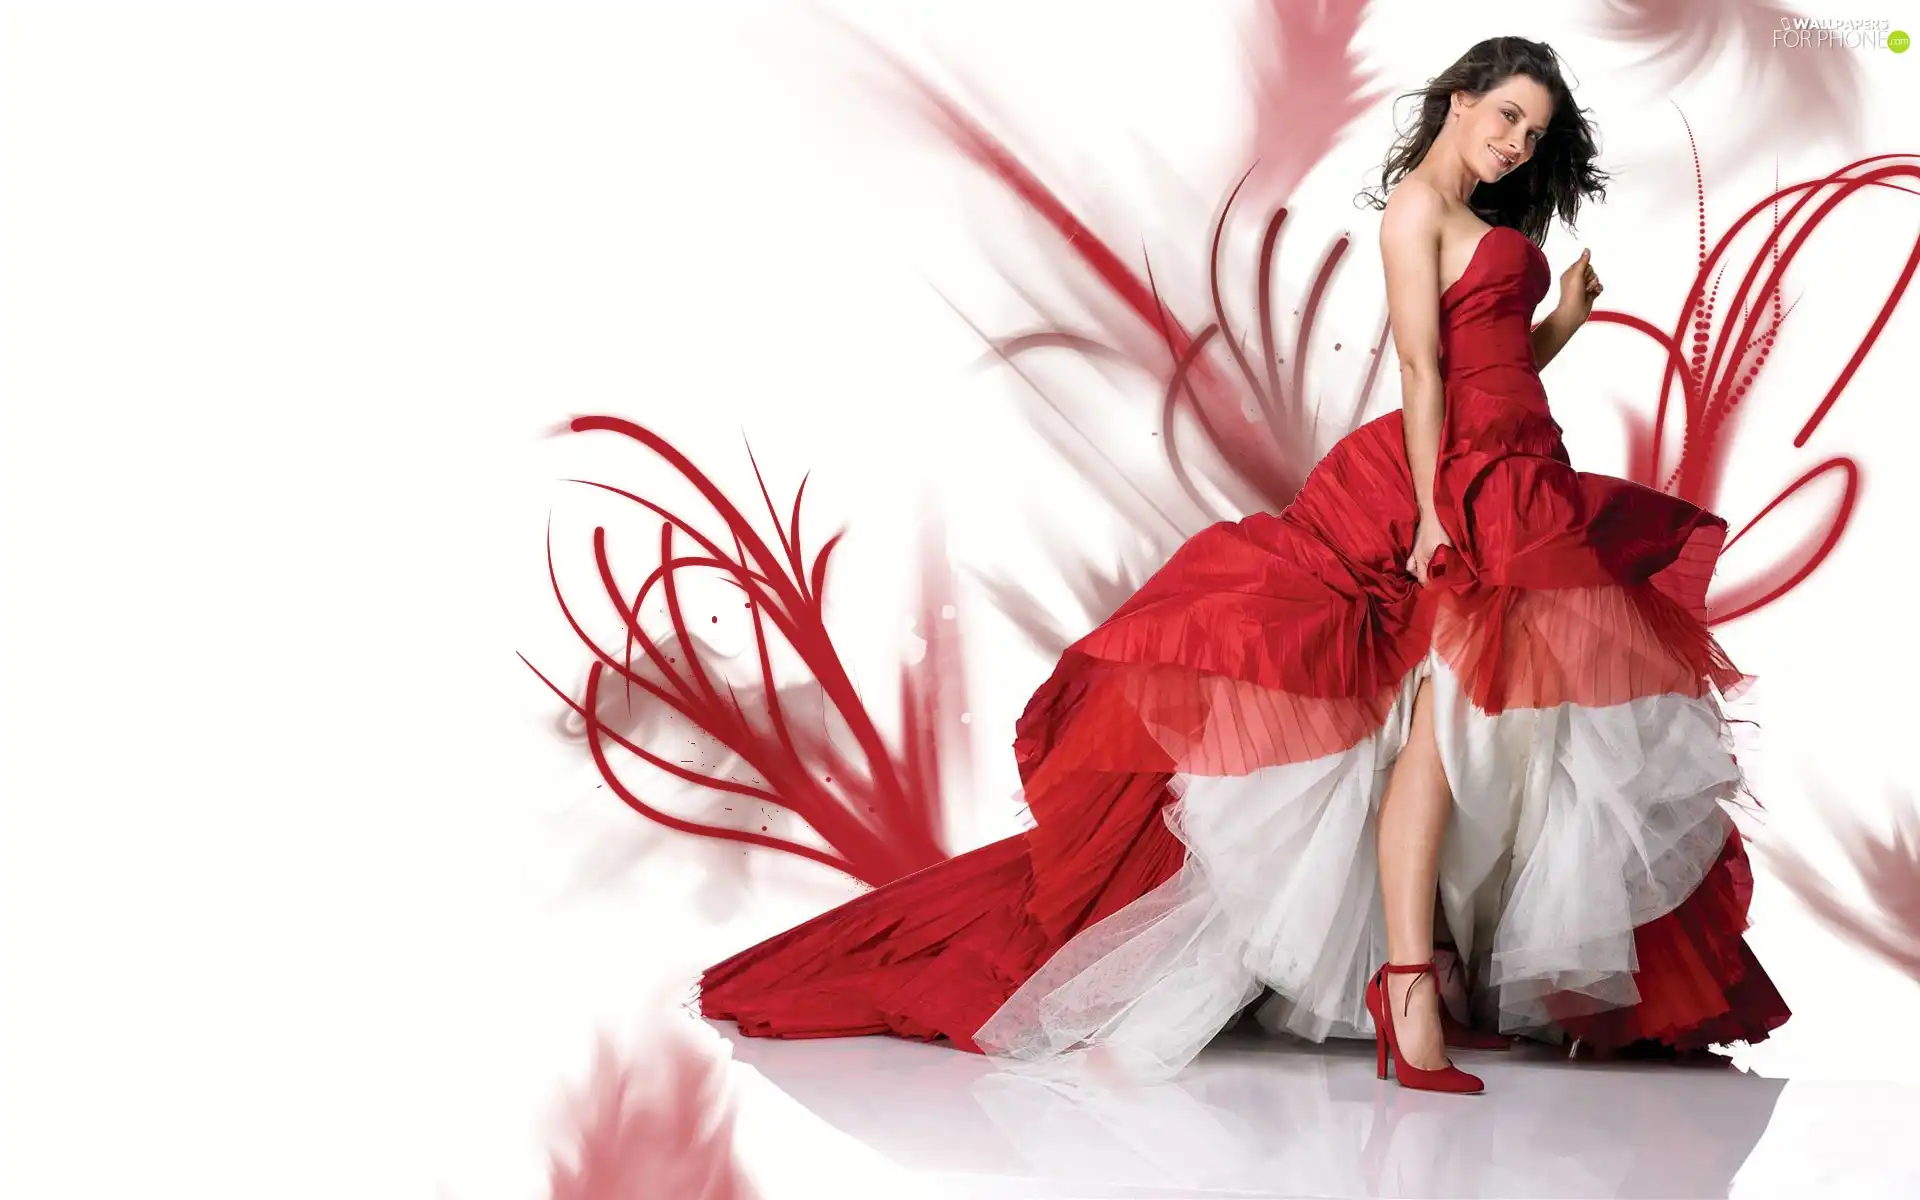 Dress, Evangeline Lilly, red hot